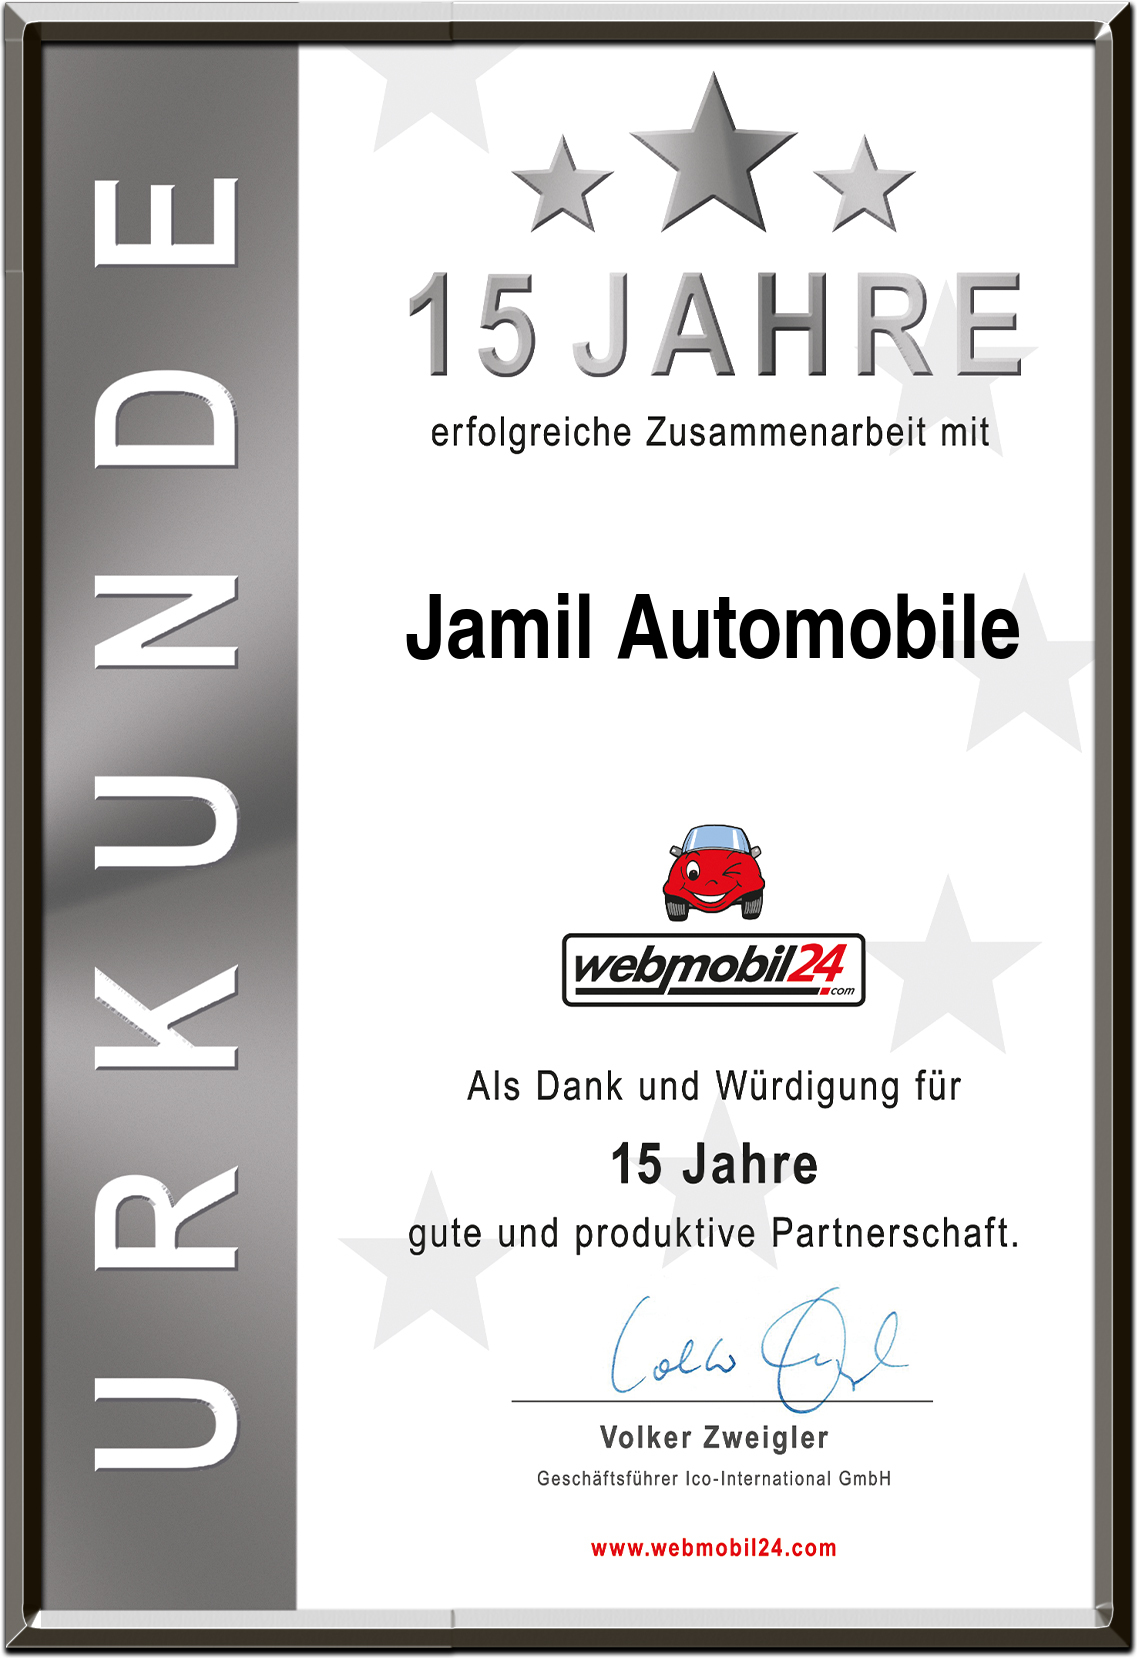 Jamil Automobile